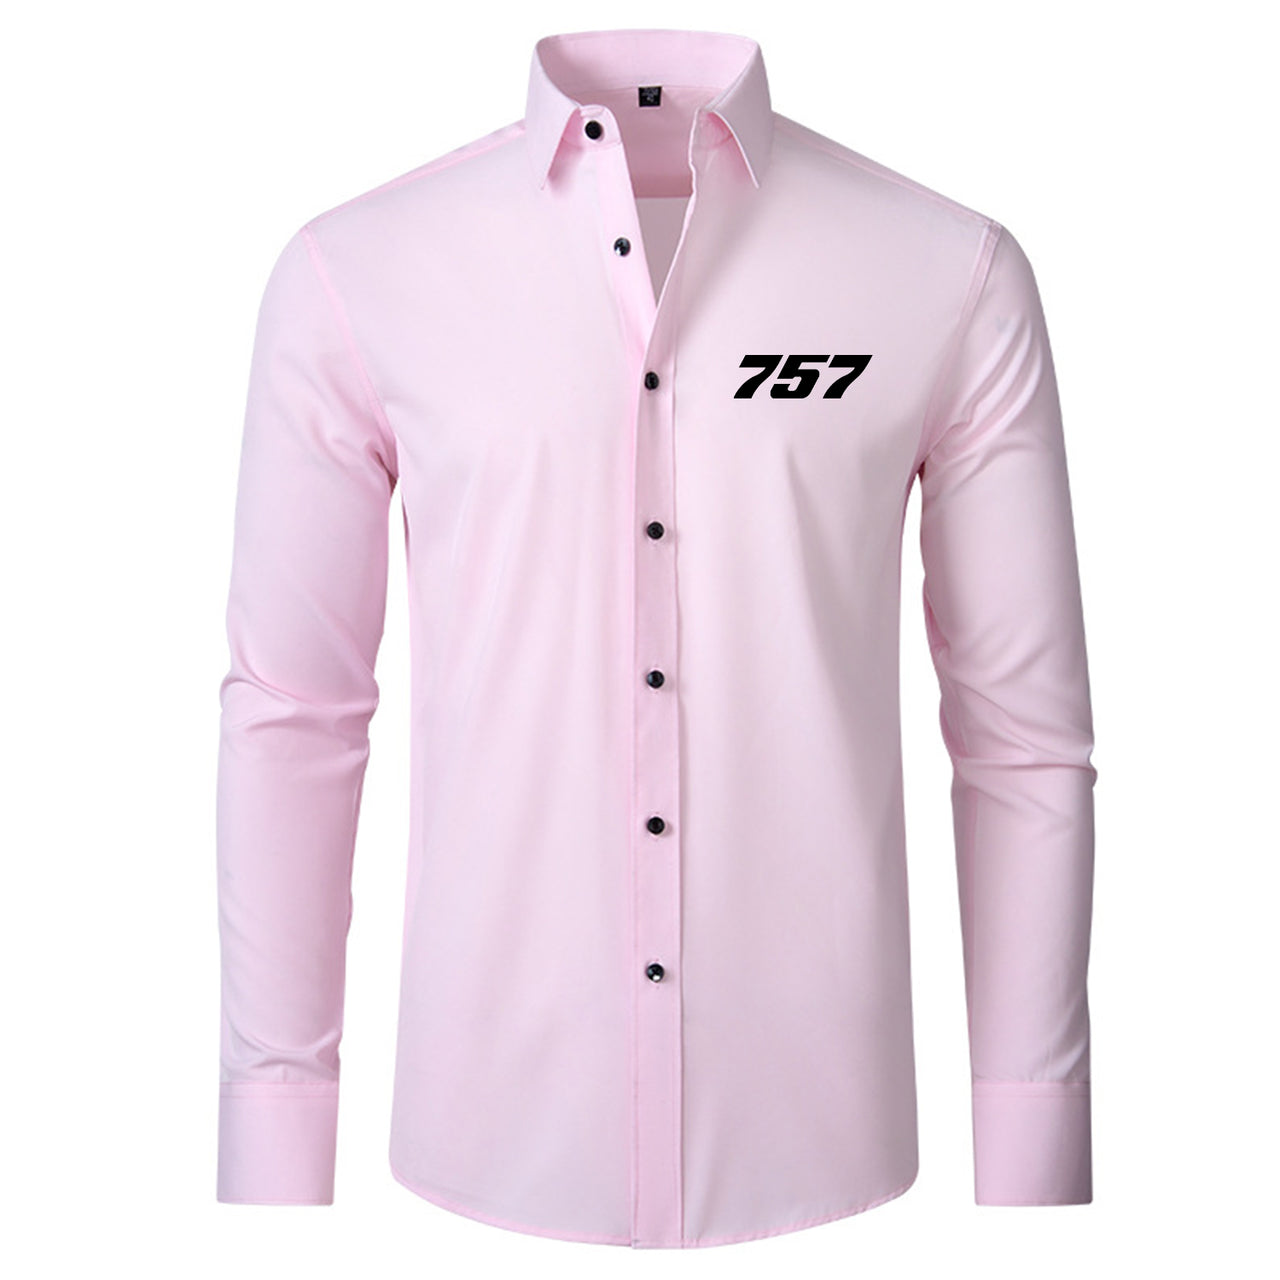 757 Flat Text Designed Long Sleeve Shirts